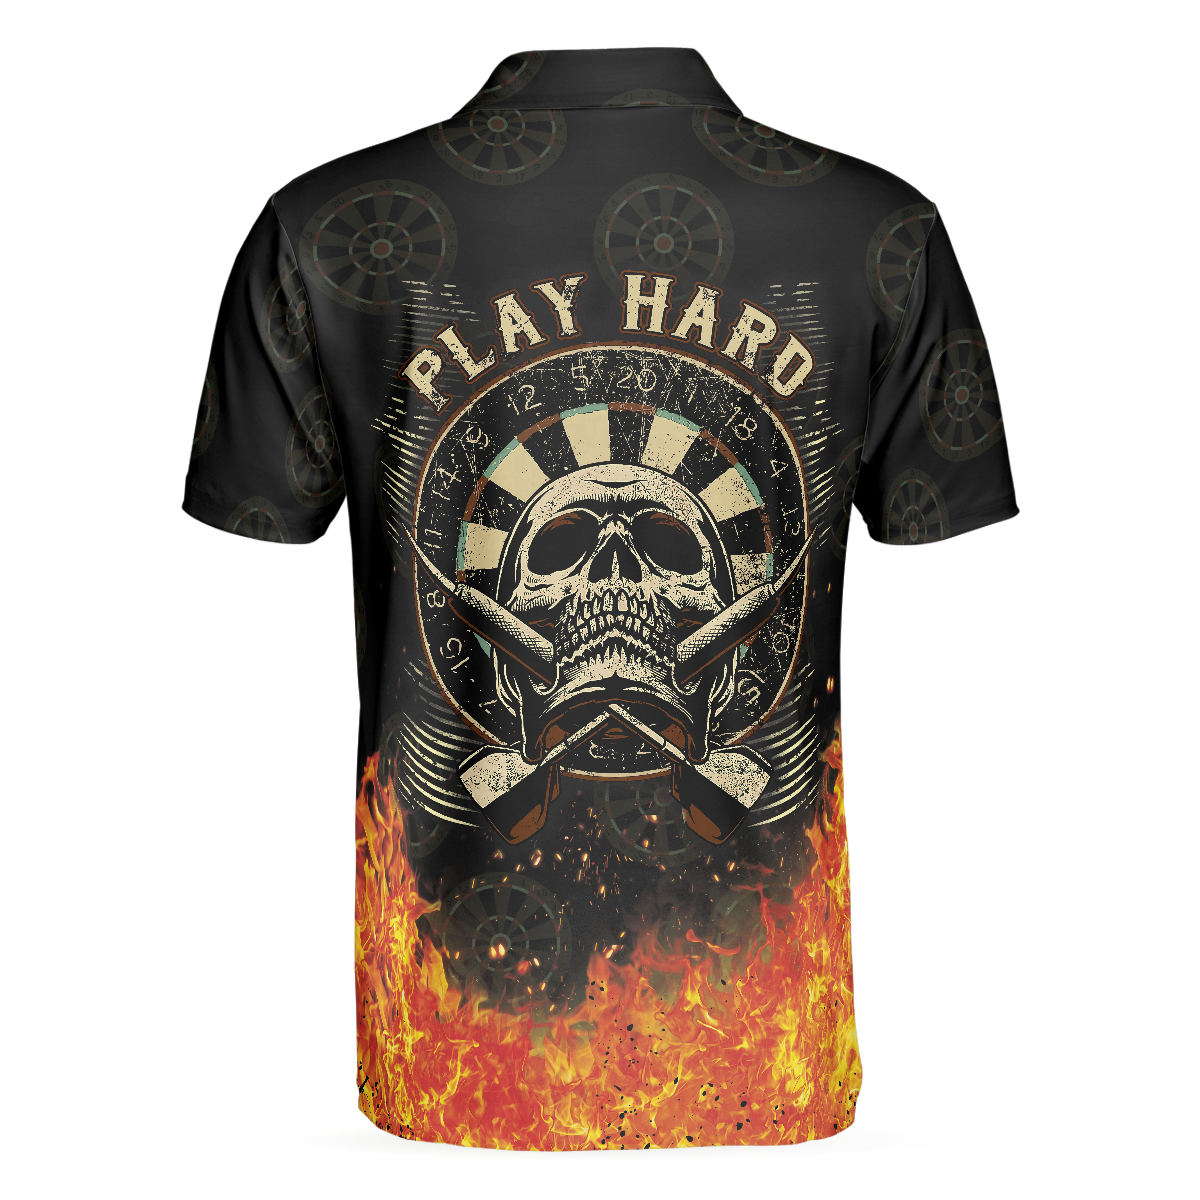 In Dart We Trust Short Sleeve Polo Shirt/ Fire Play Hard Skull Polo Shirt/ Cool Dart Shirt For Men